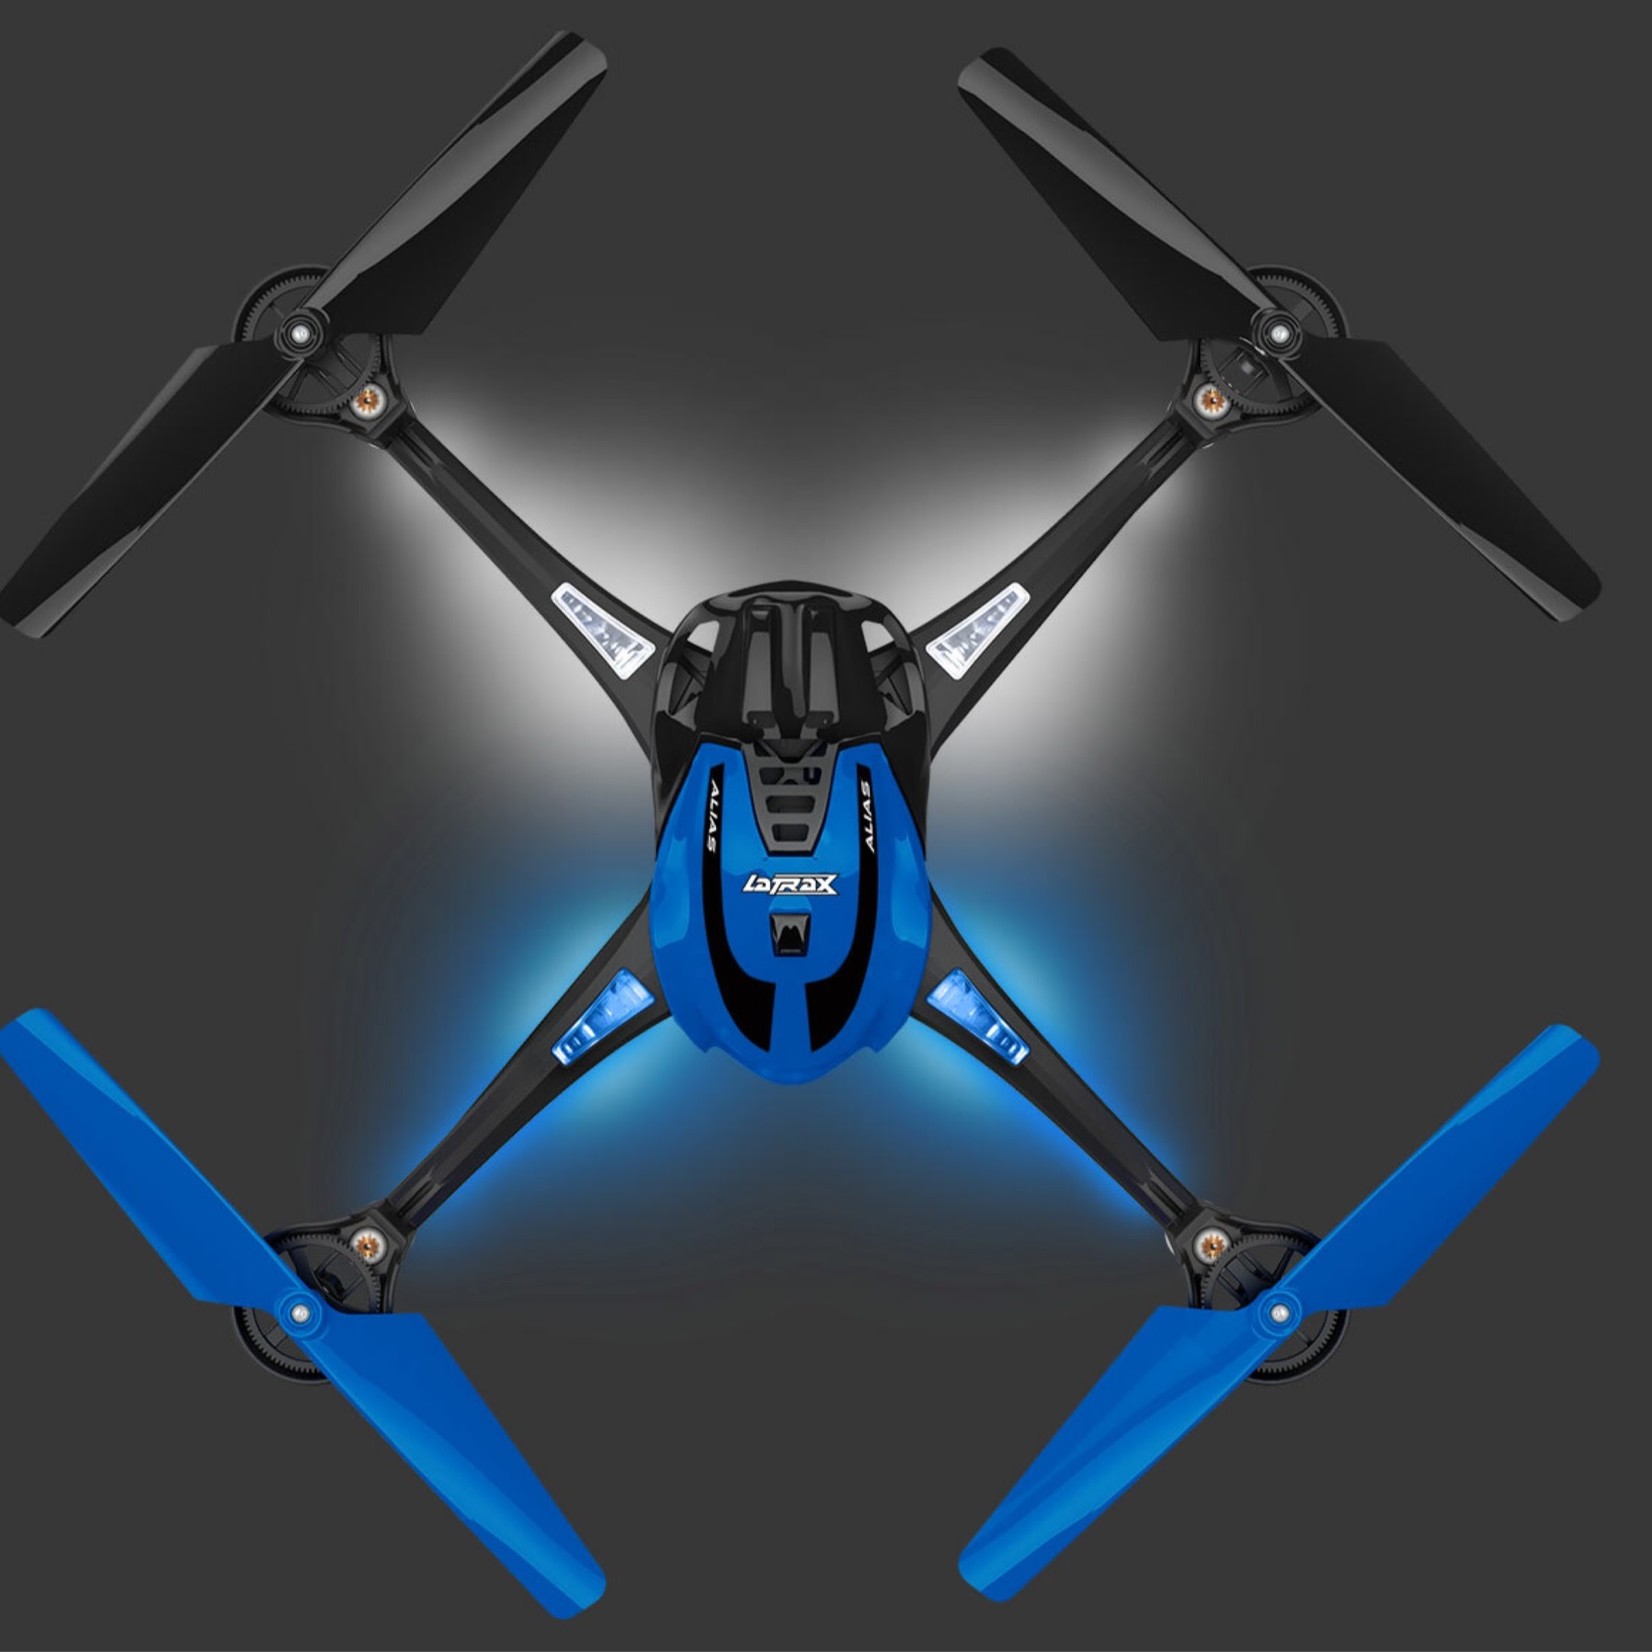 LaTrax Traxxas LaTrax Alias Ready-To-Fly Micro Electric Quadcopter Drone (Blue) #6608-BLUE